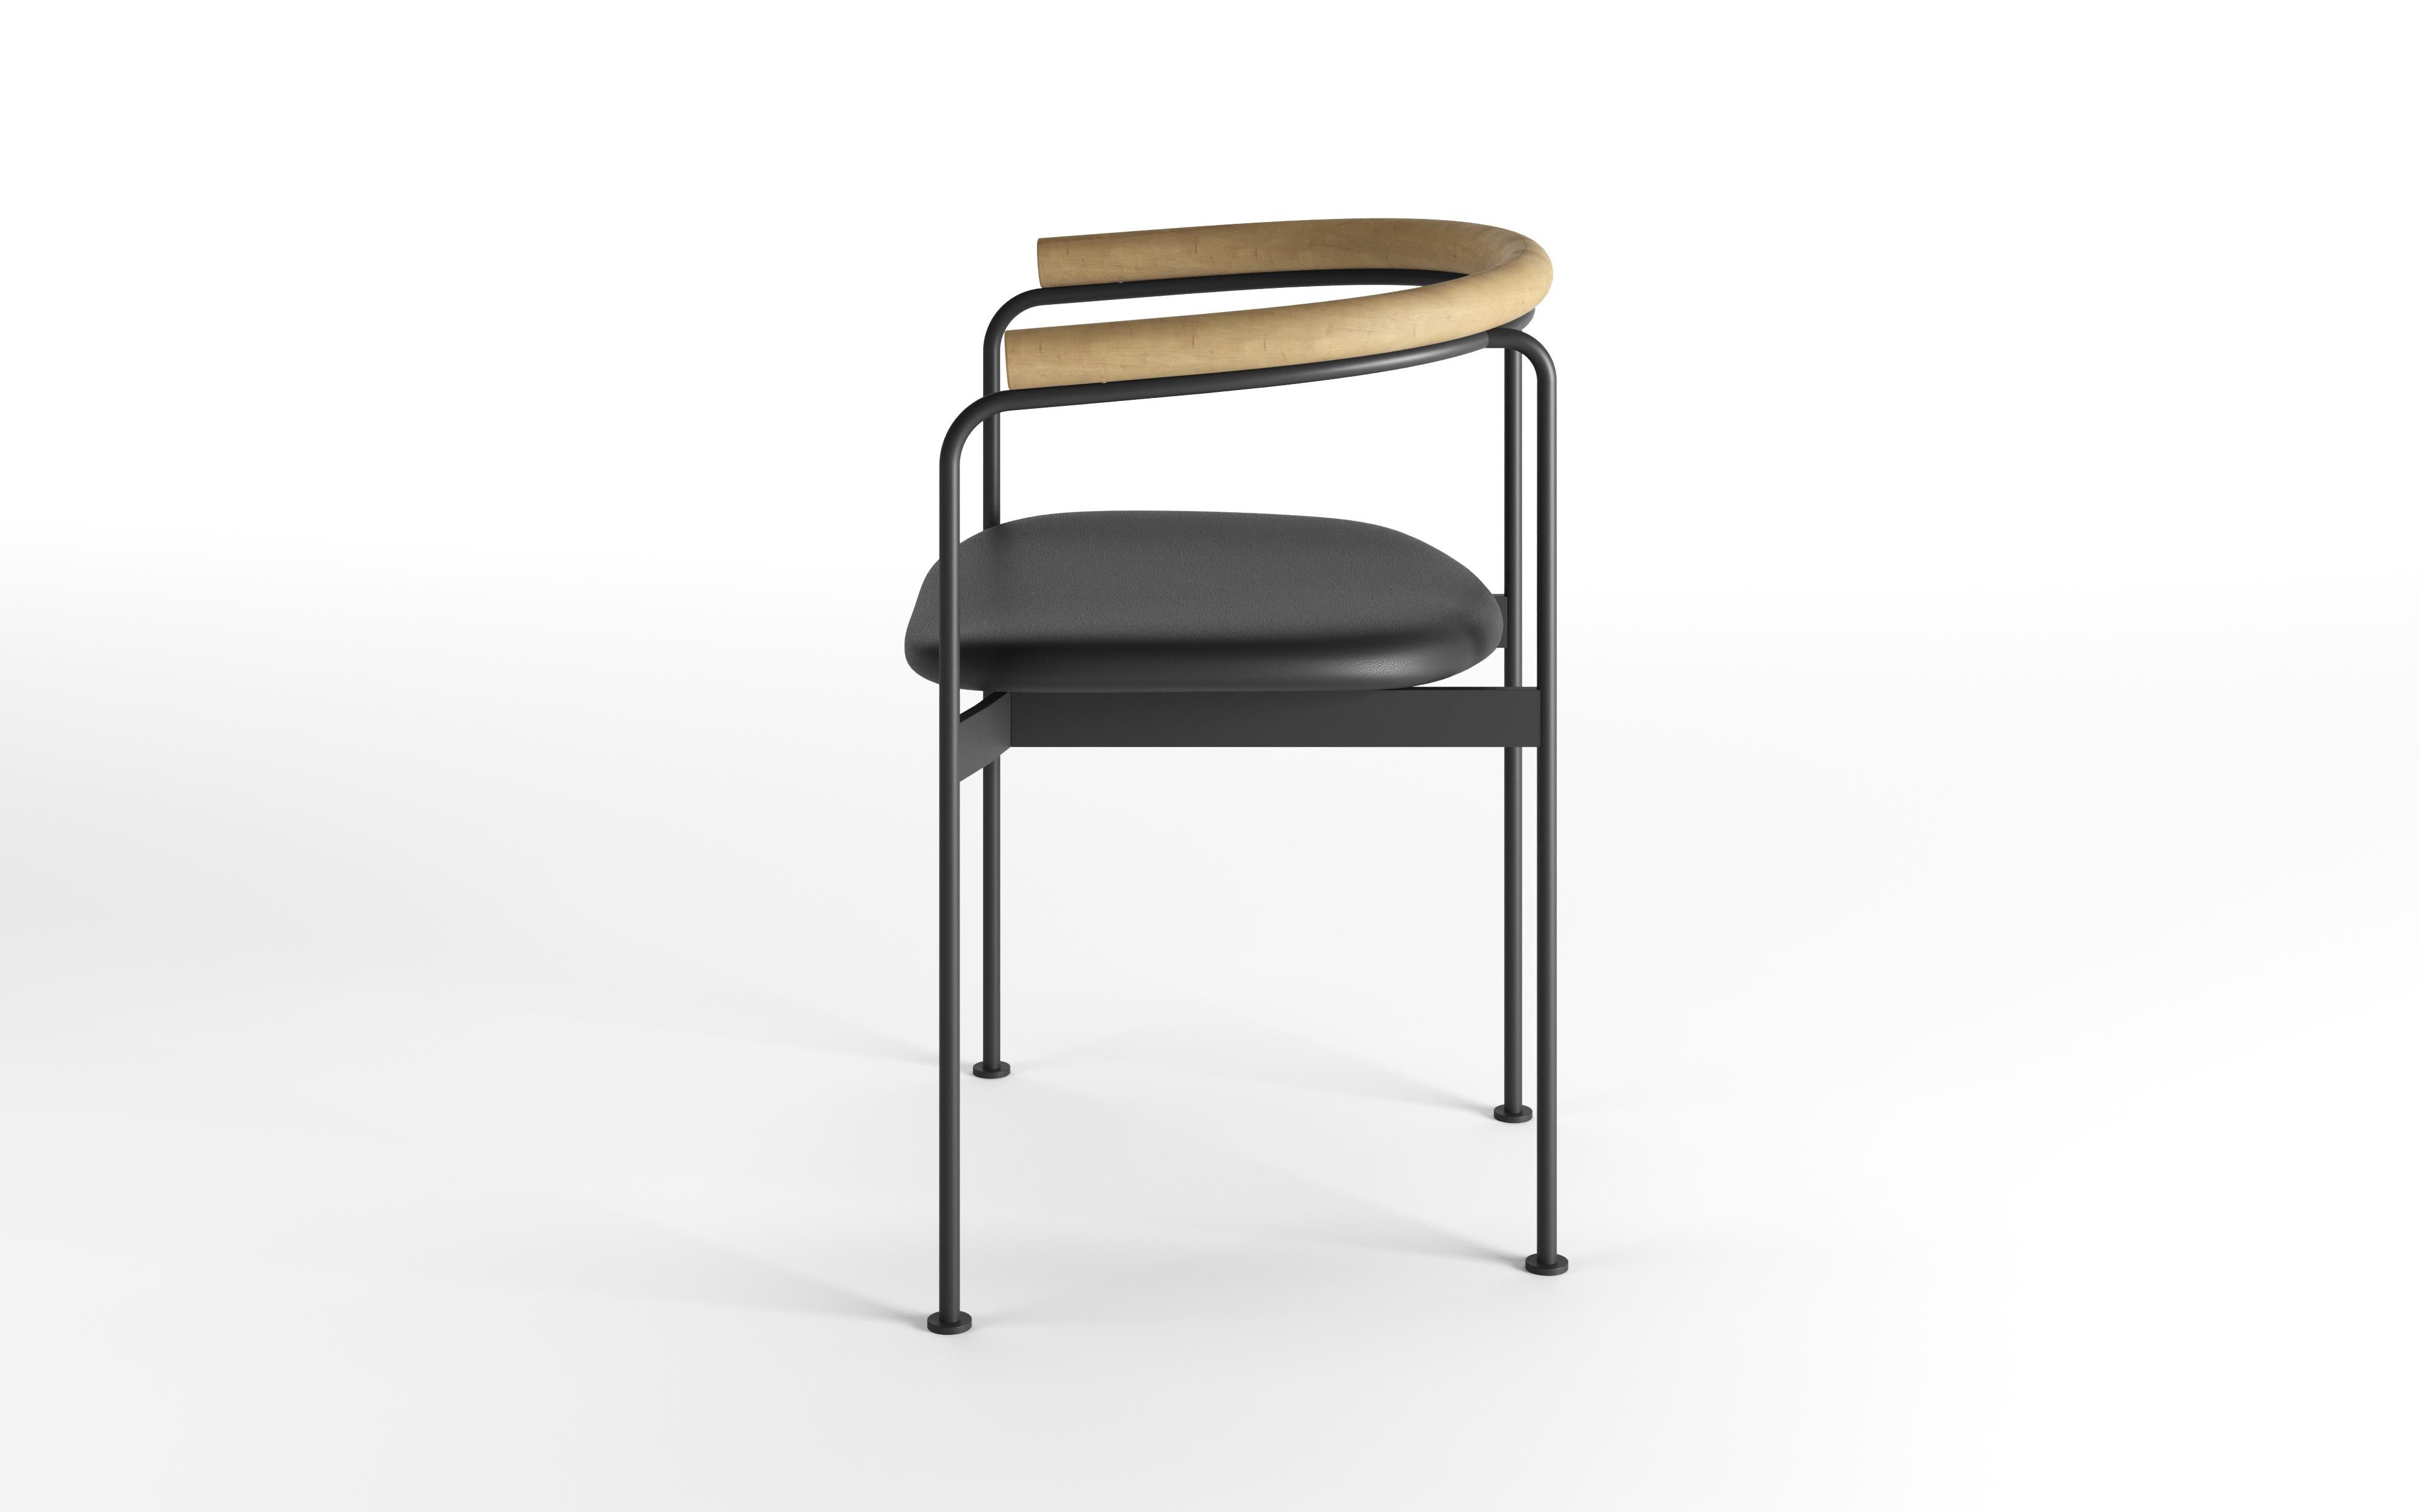 BAIA chair
Steel, leather and oak
Dimensions: H 70 x 55 x 48 cm 

Frame: 
– Red
– Green
– Black

Wood:
– Oak
– Smoked oak
– Black lacquered oak
– Walnut

Fabrics:
– Remix
– Savanne leather
– Hallingdal 
– SteelCiutTrio